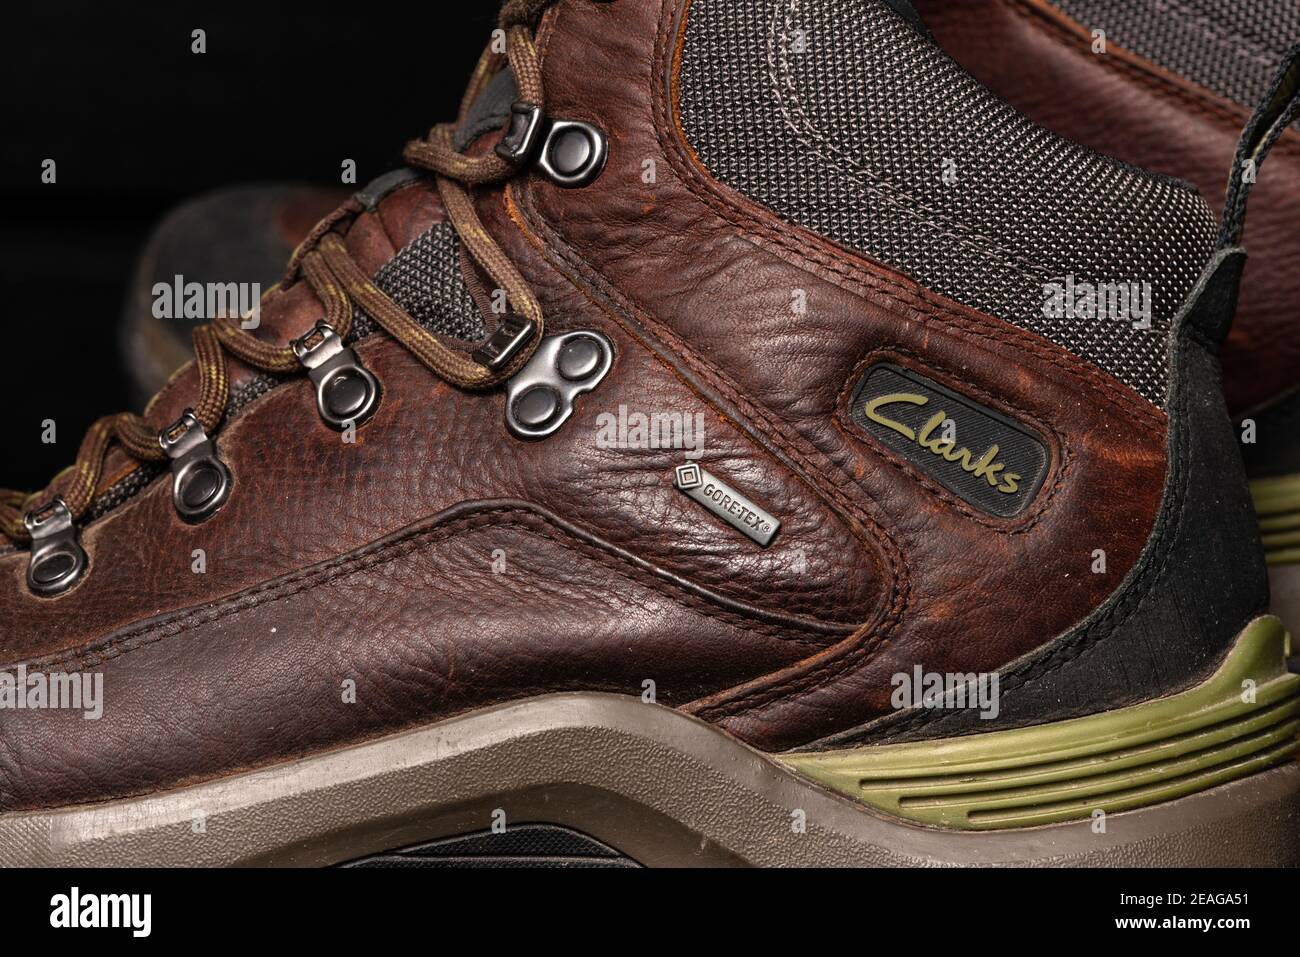 clarks outdoor boots